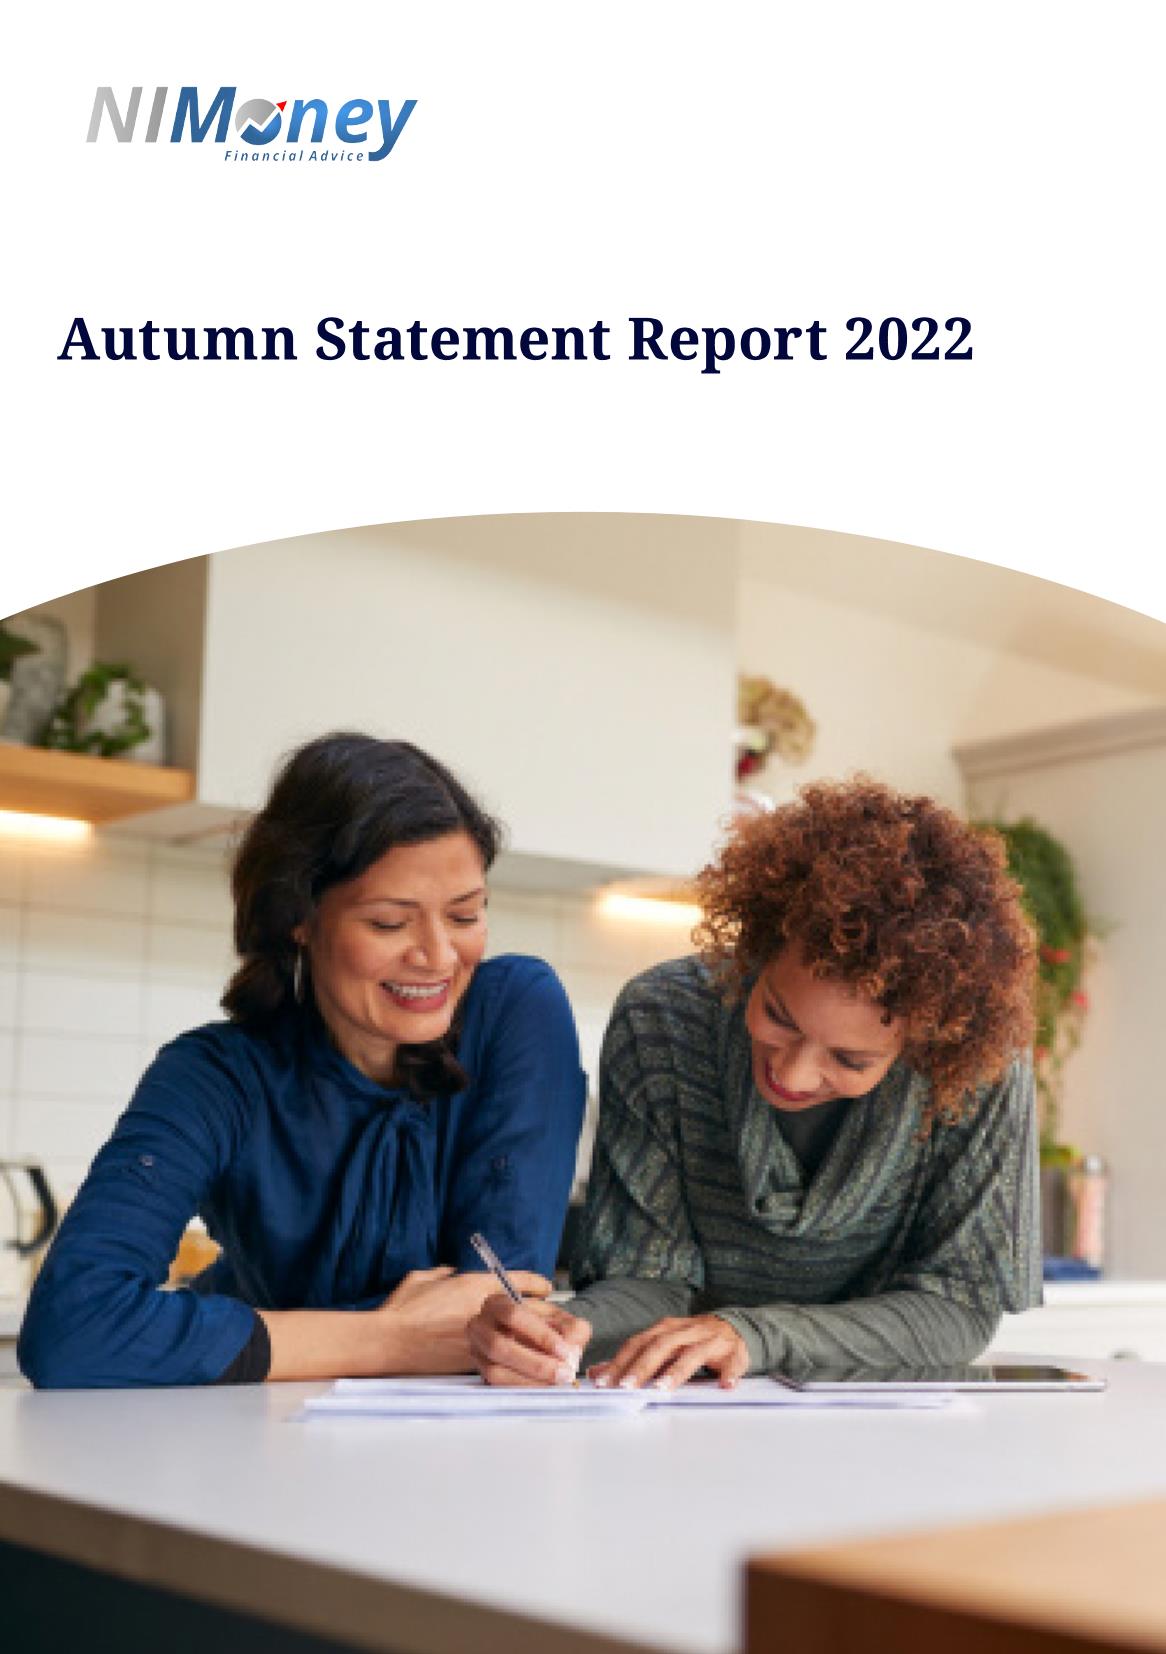 assignment questions autumn 2022